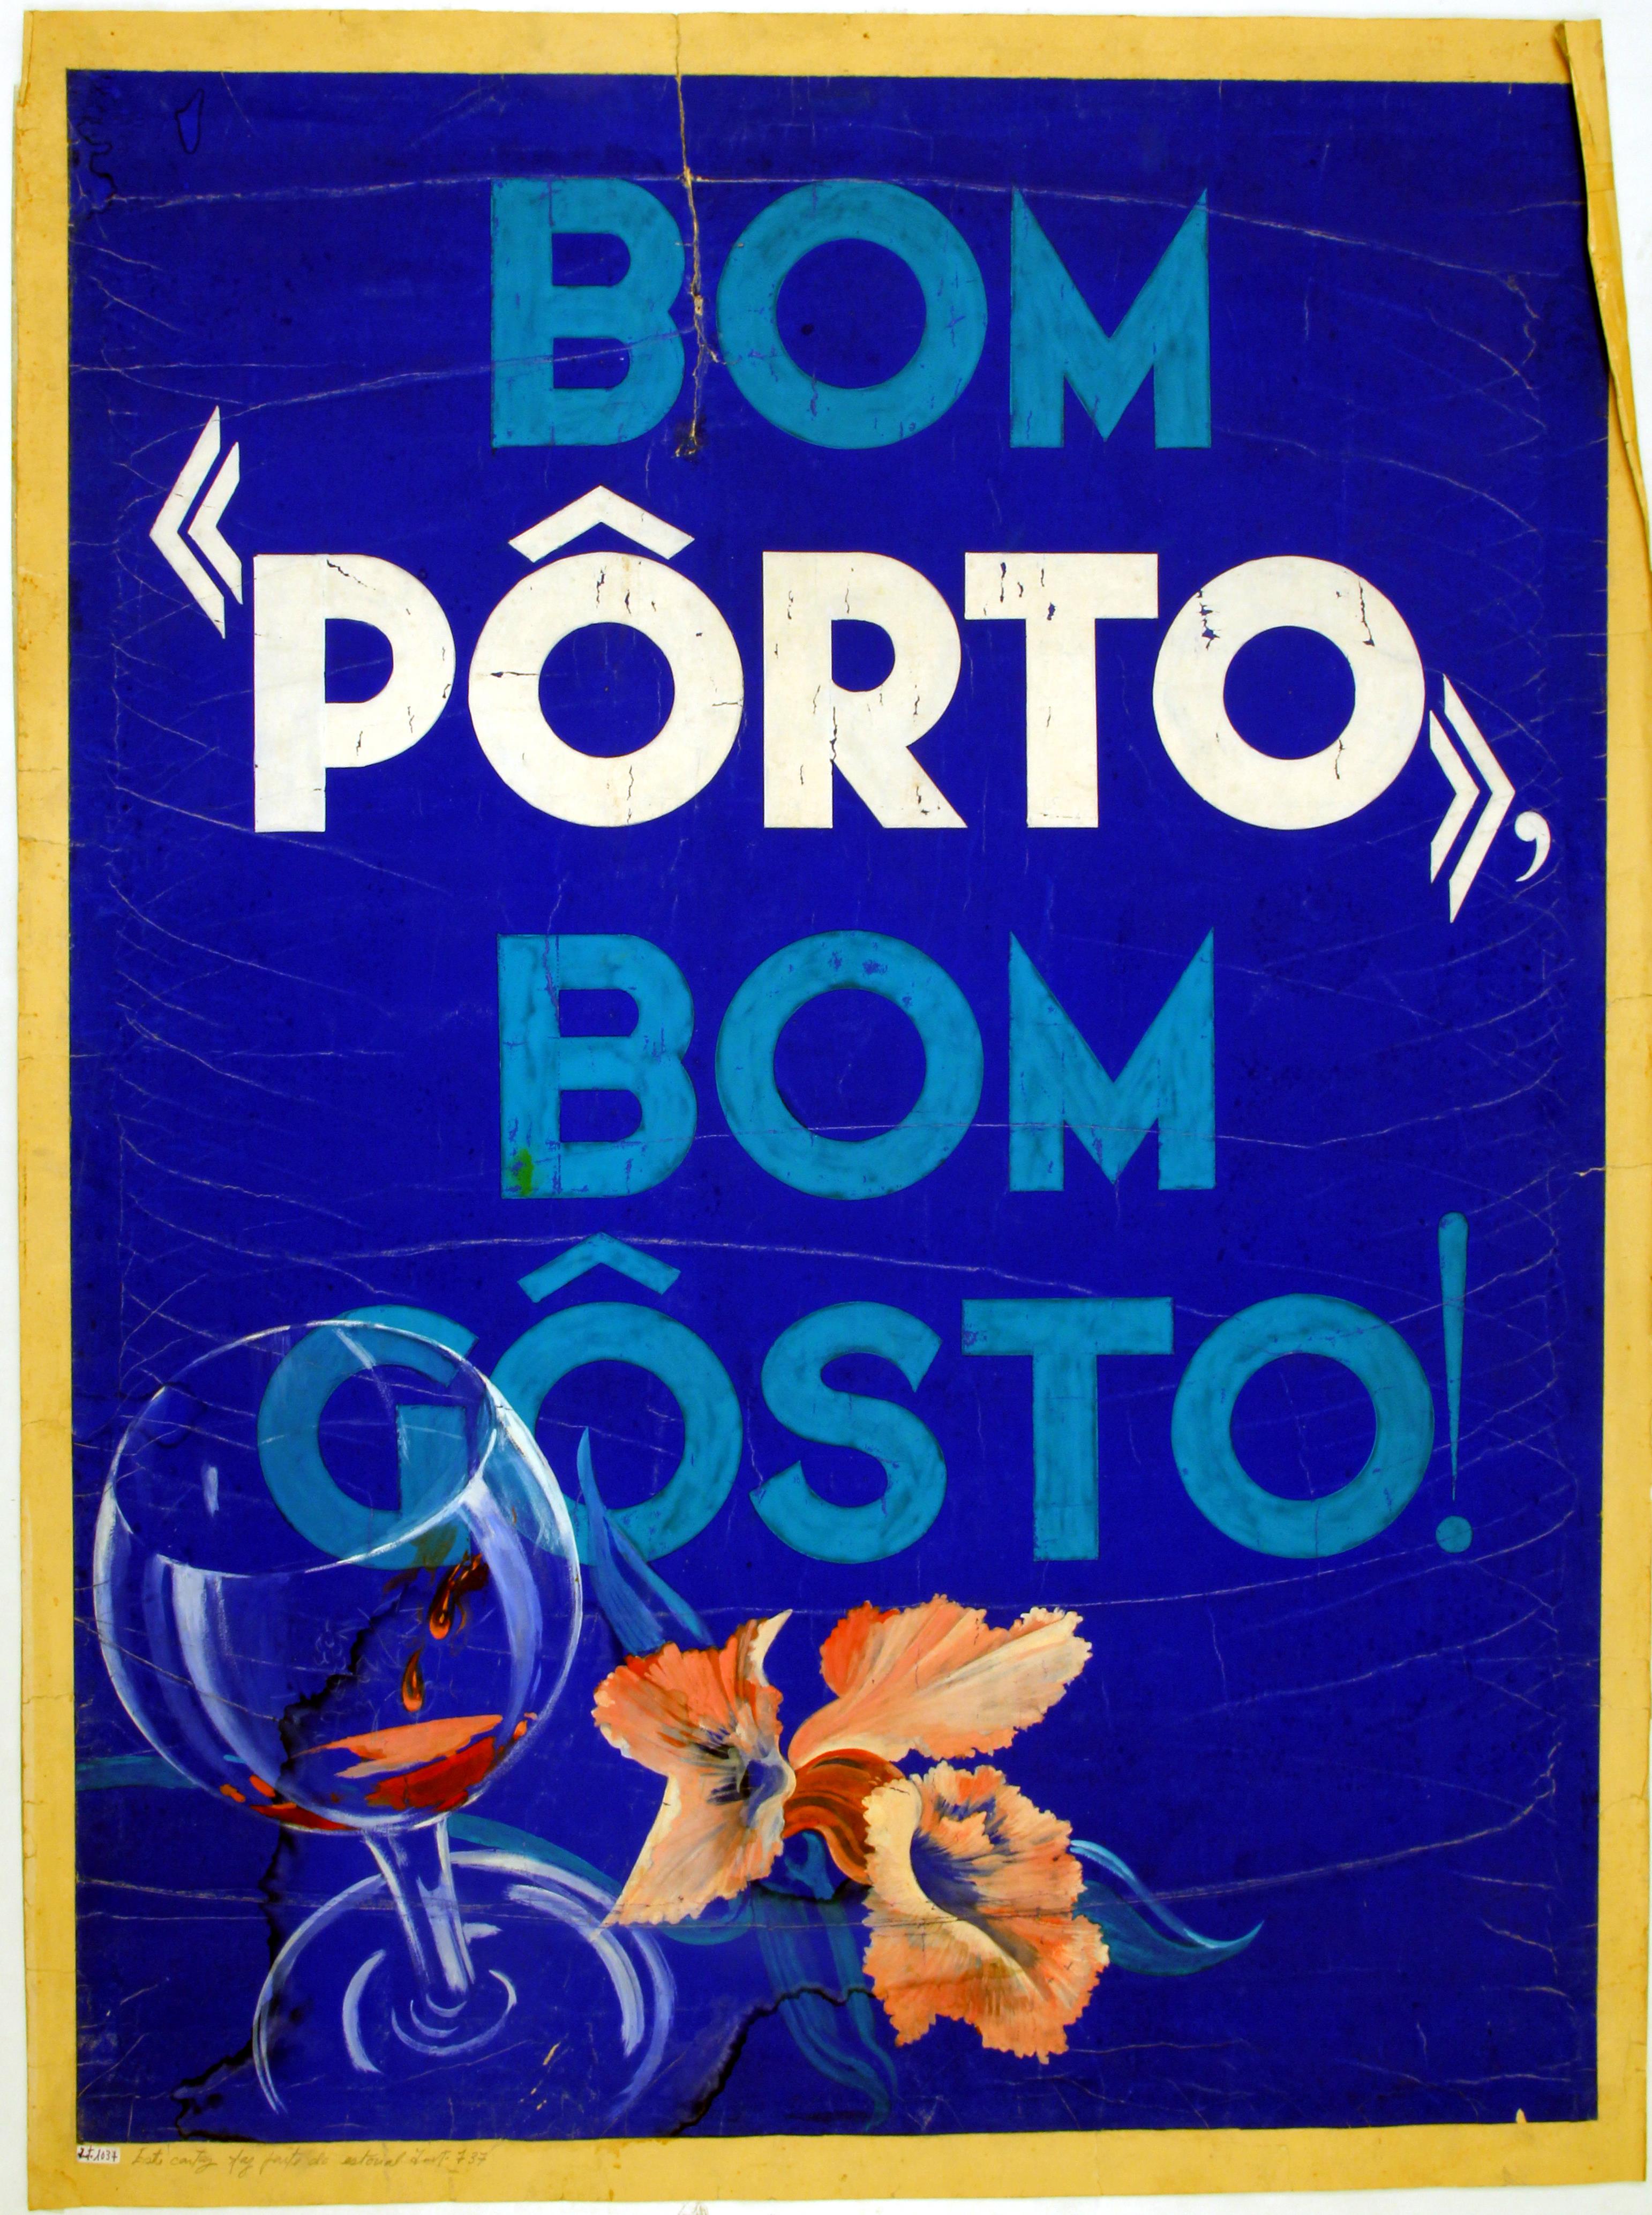 Bom «Porto», bom gosto!